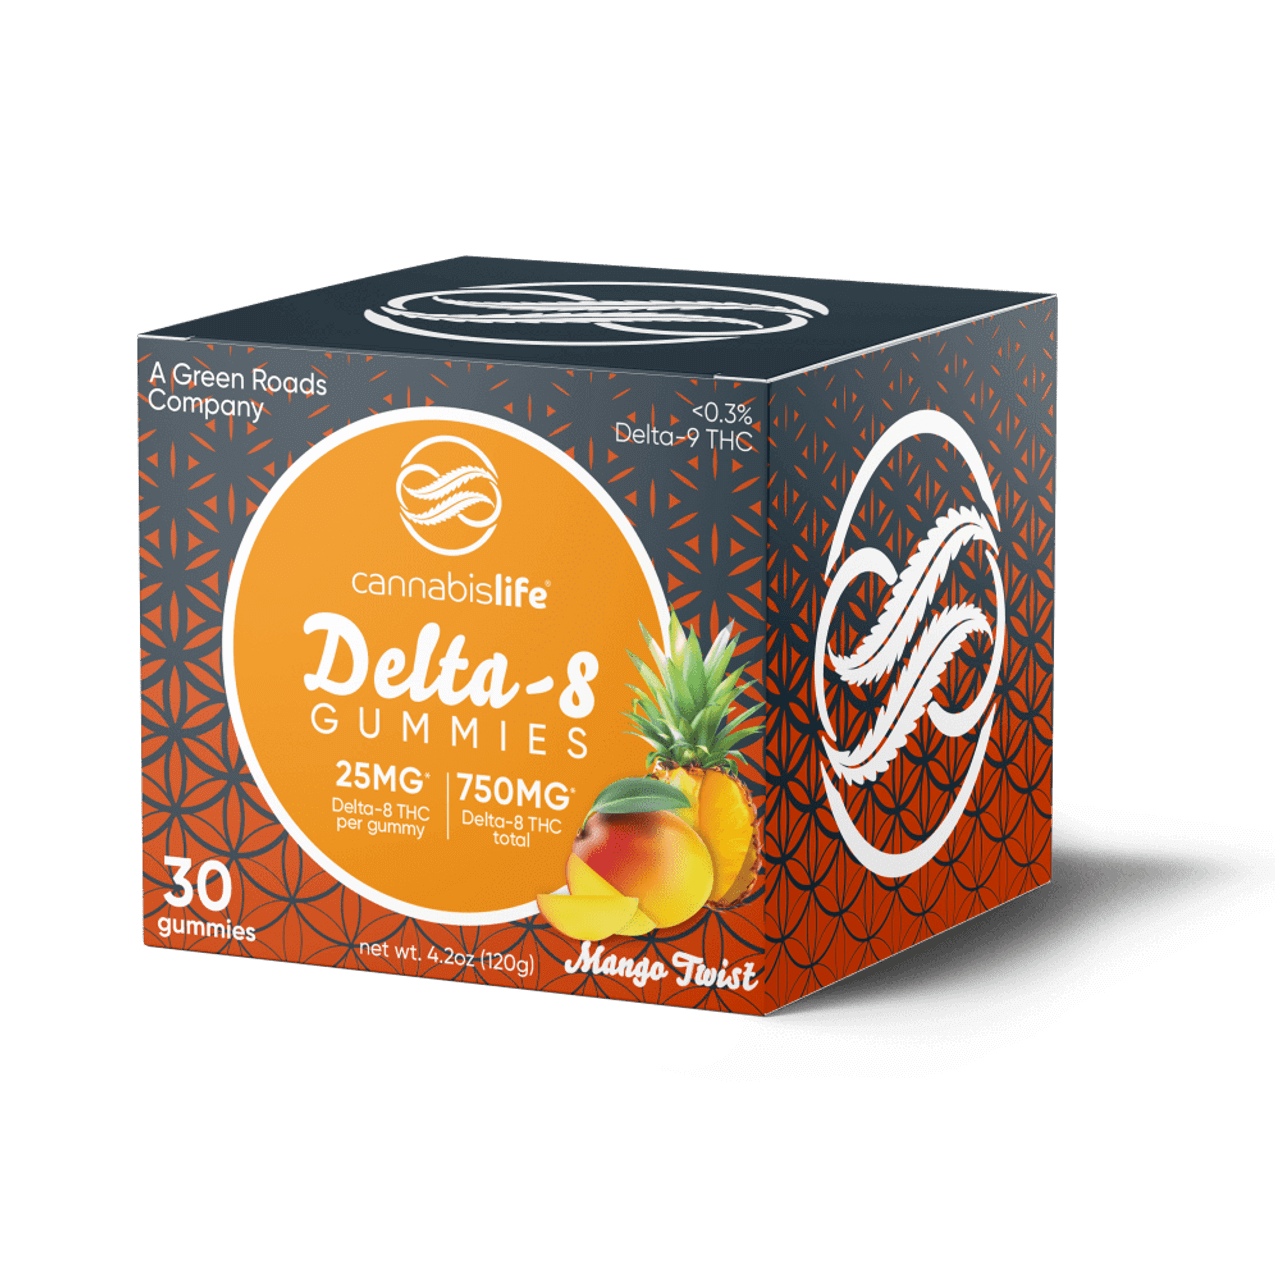 Cannabis Life Mango Twist Delta-8 Gummies (30ct) 750mg image